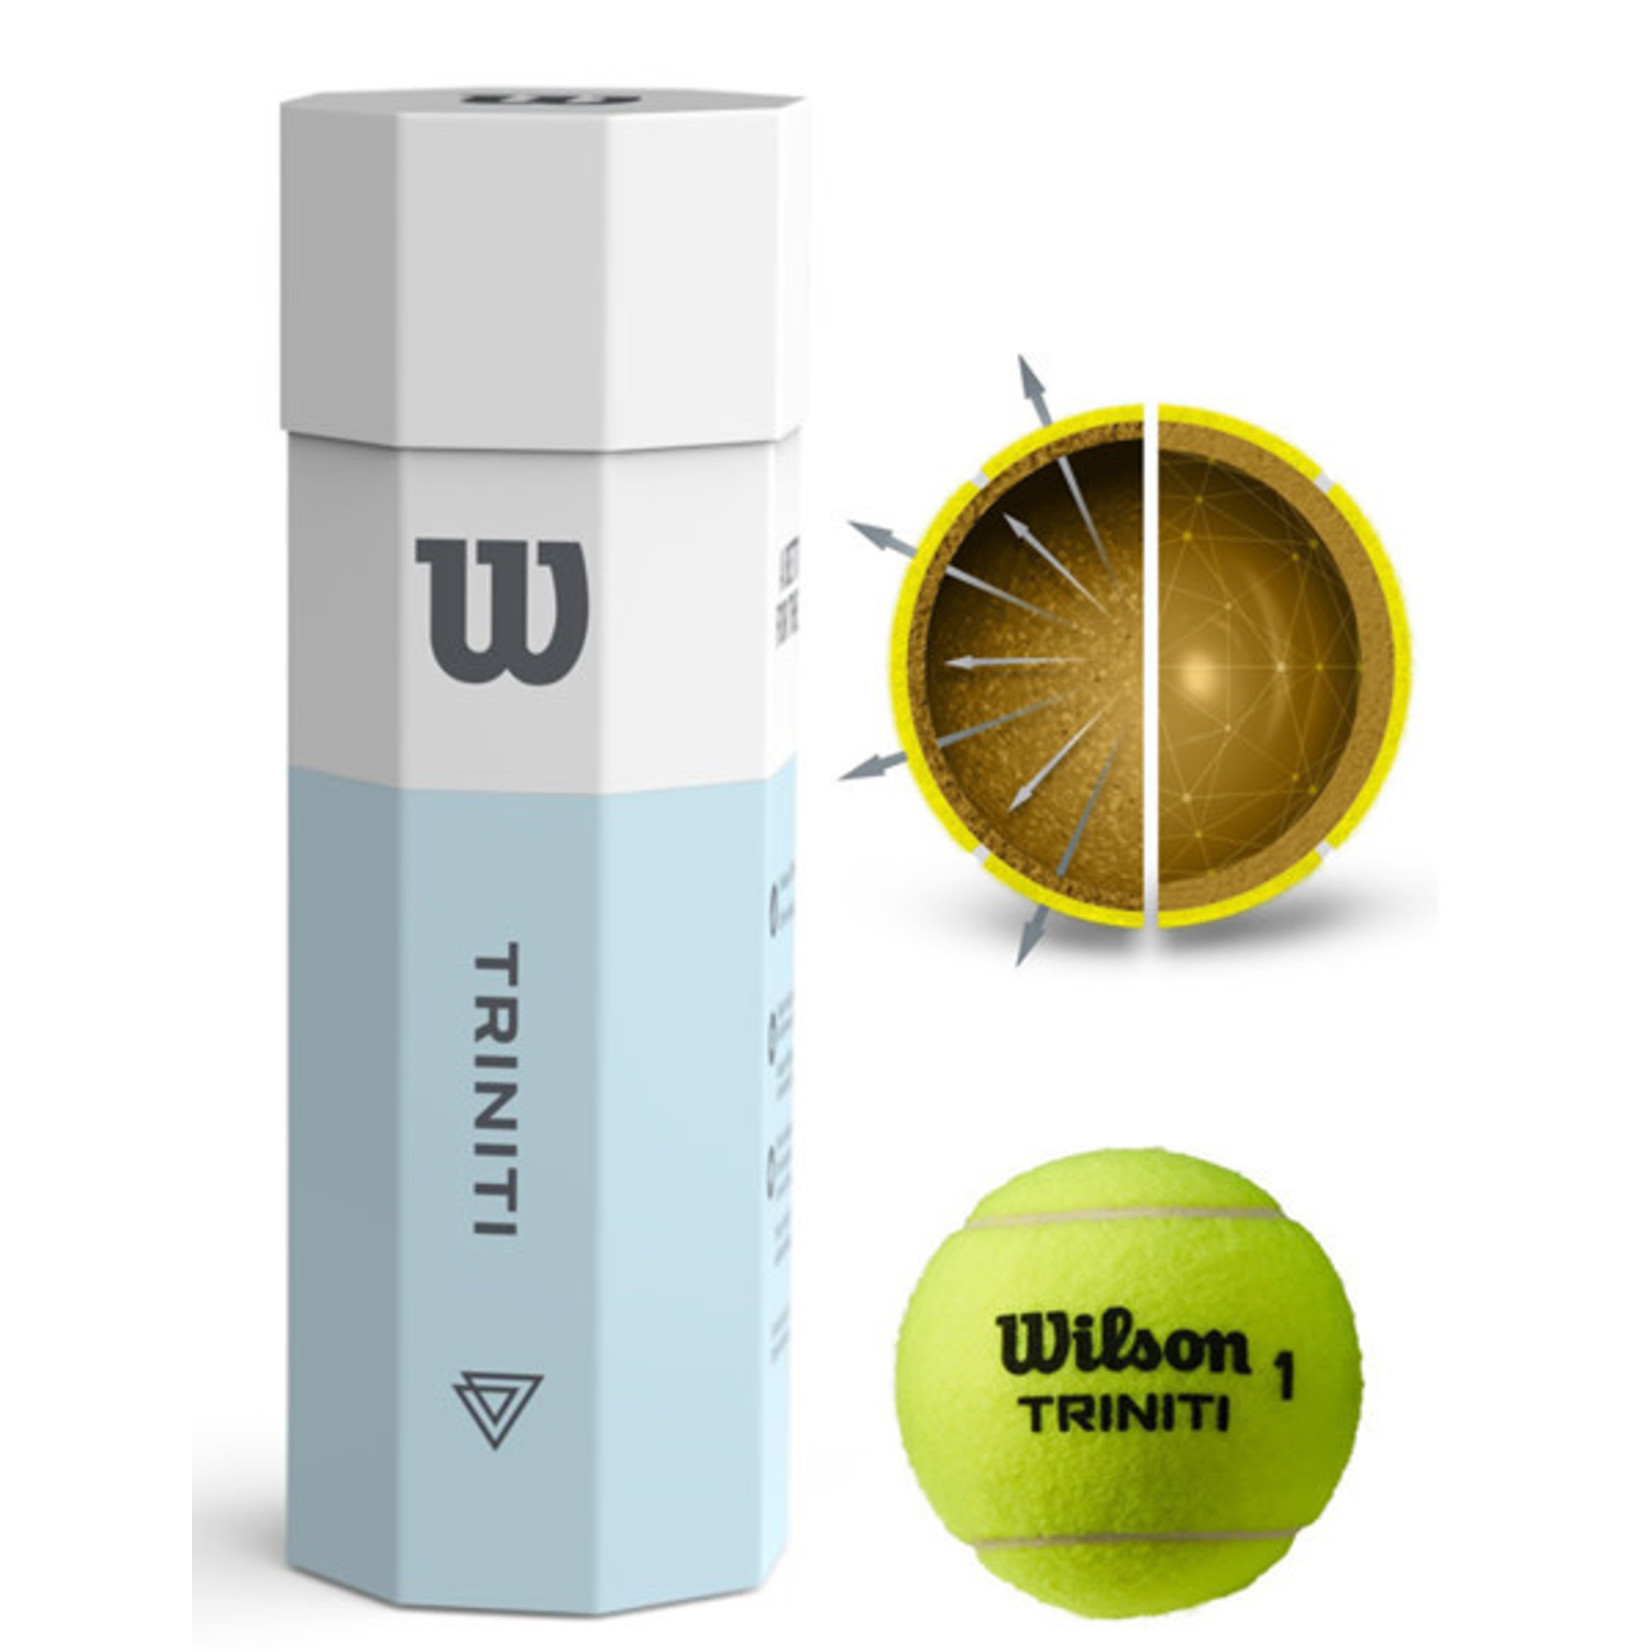 Wilson WilsonTriniti Pressureless Tennis Balls